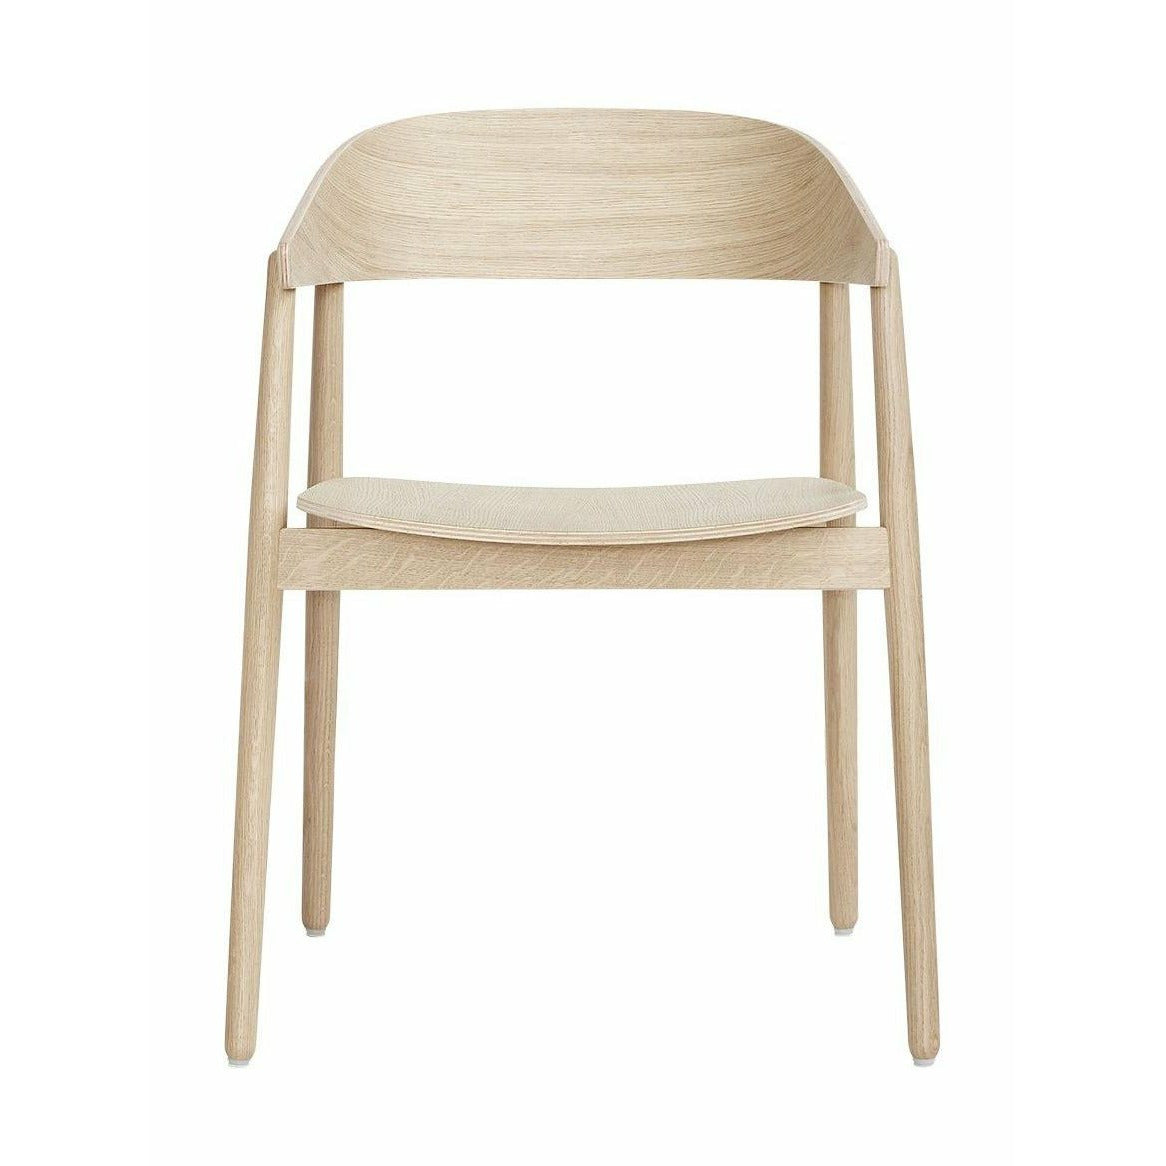 Andersen Furniture AC2 sedia in quercia, laccata pigmentata bianca